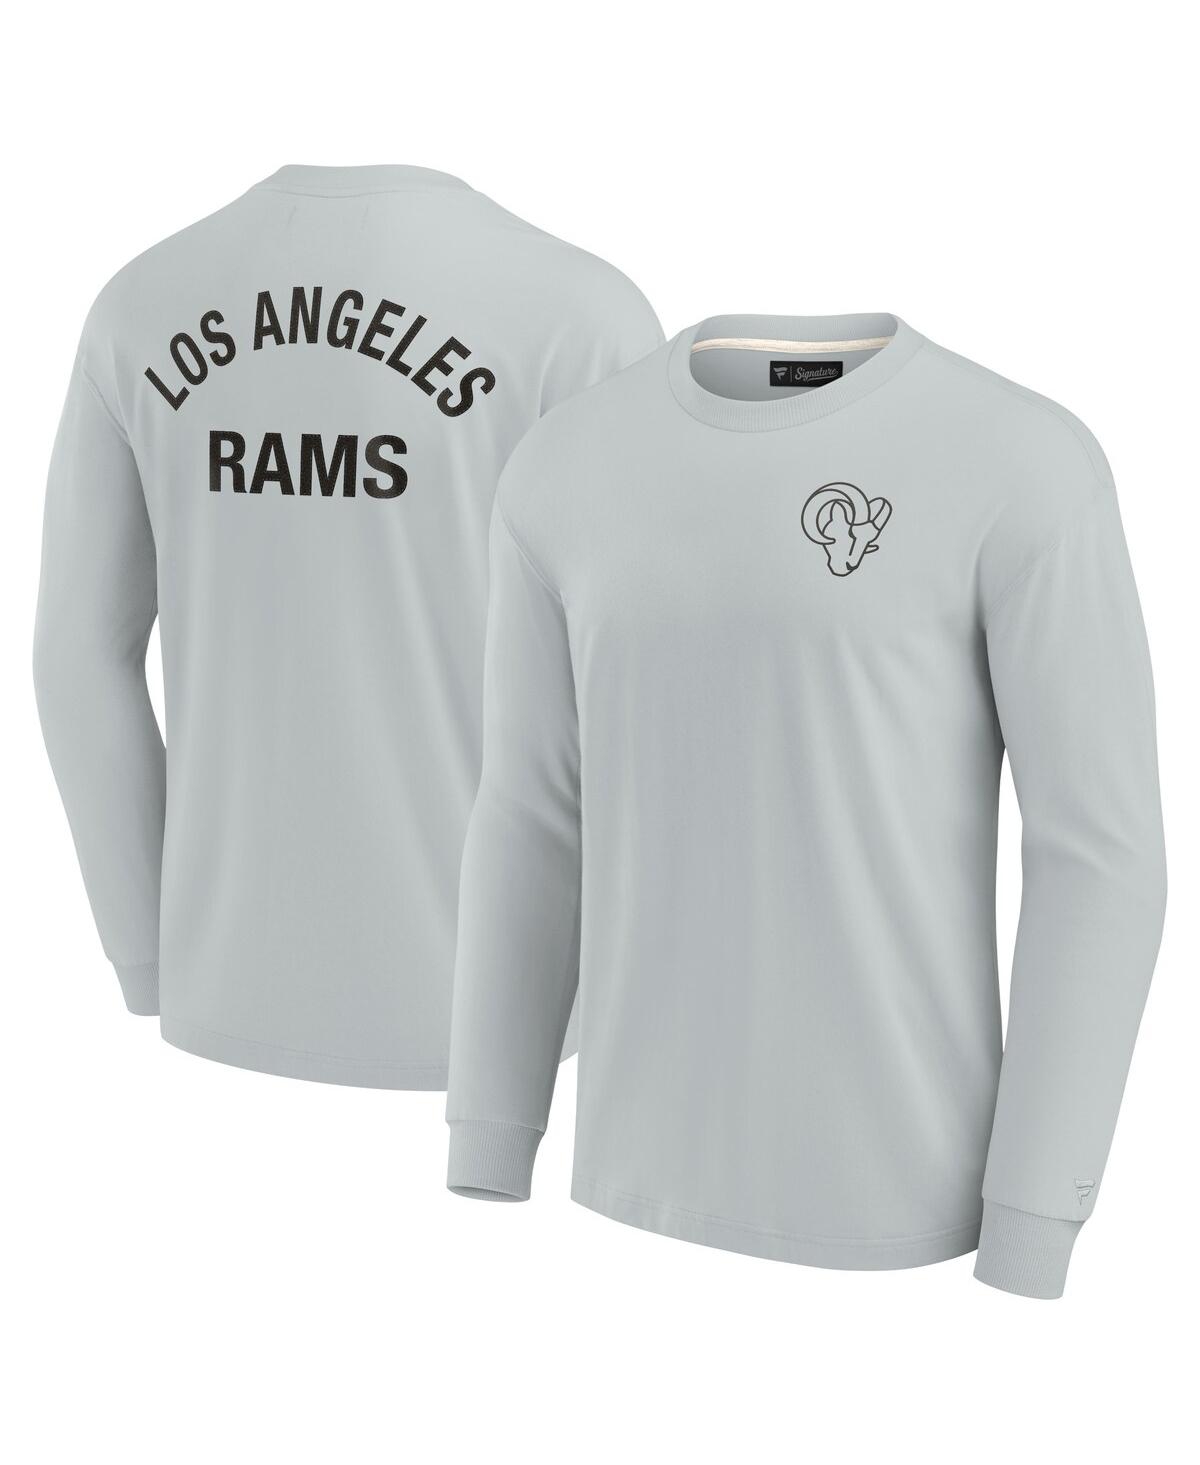 Fanatics Signature Men's And Women's  Gray Los Angeles Rams Super Soft Long Sleeve T-shirt